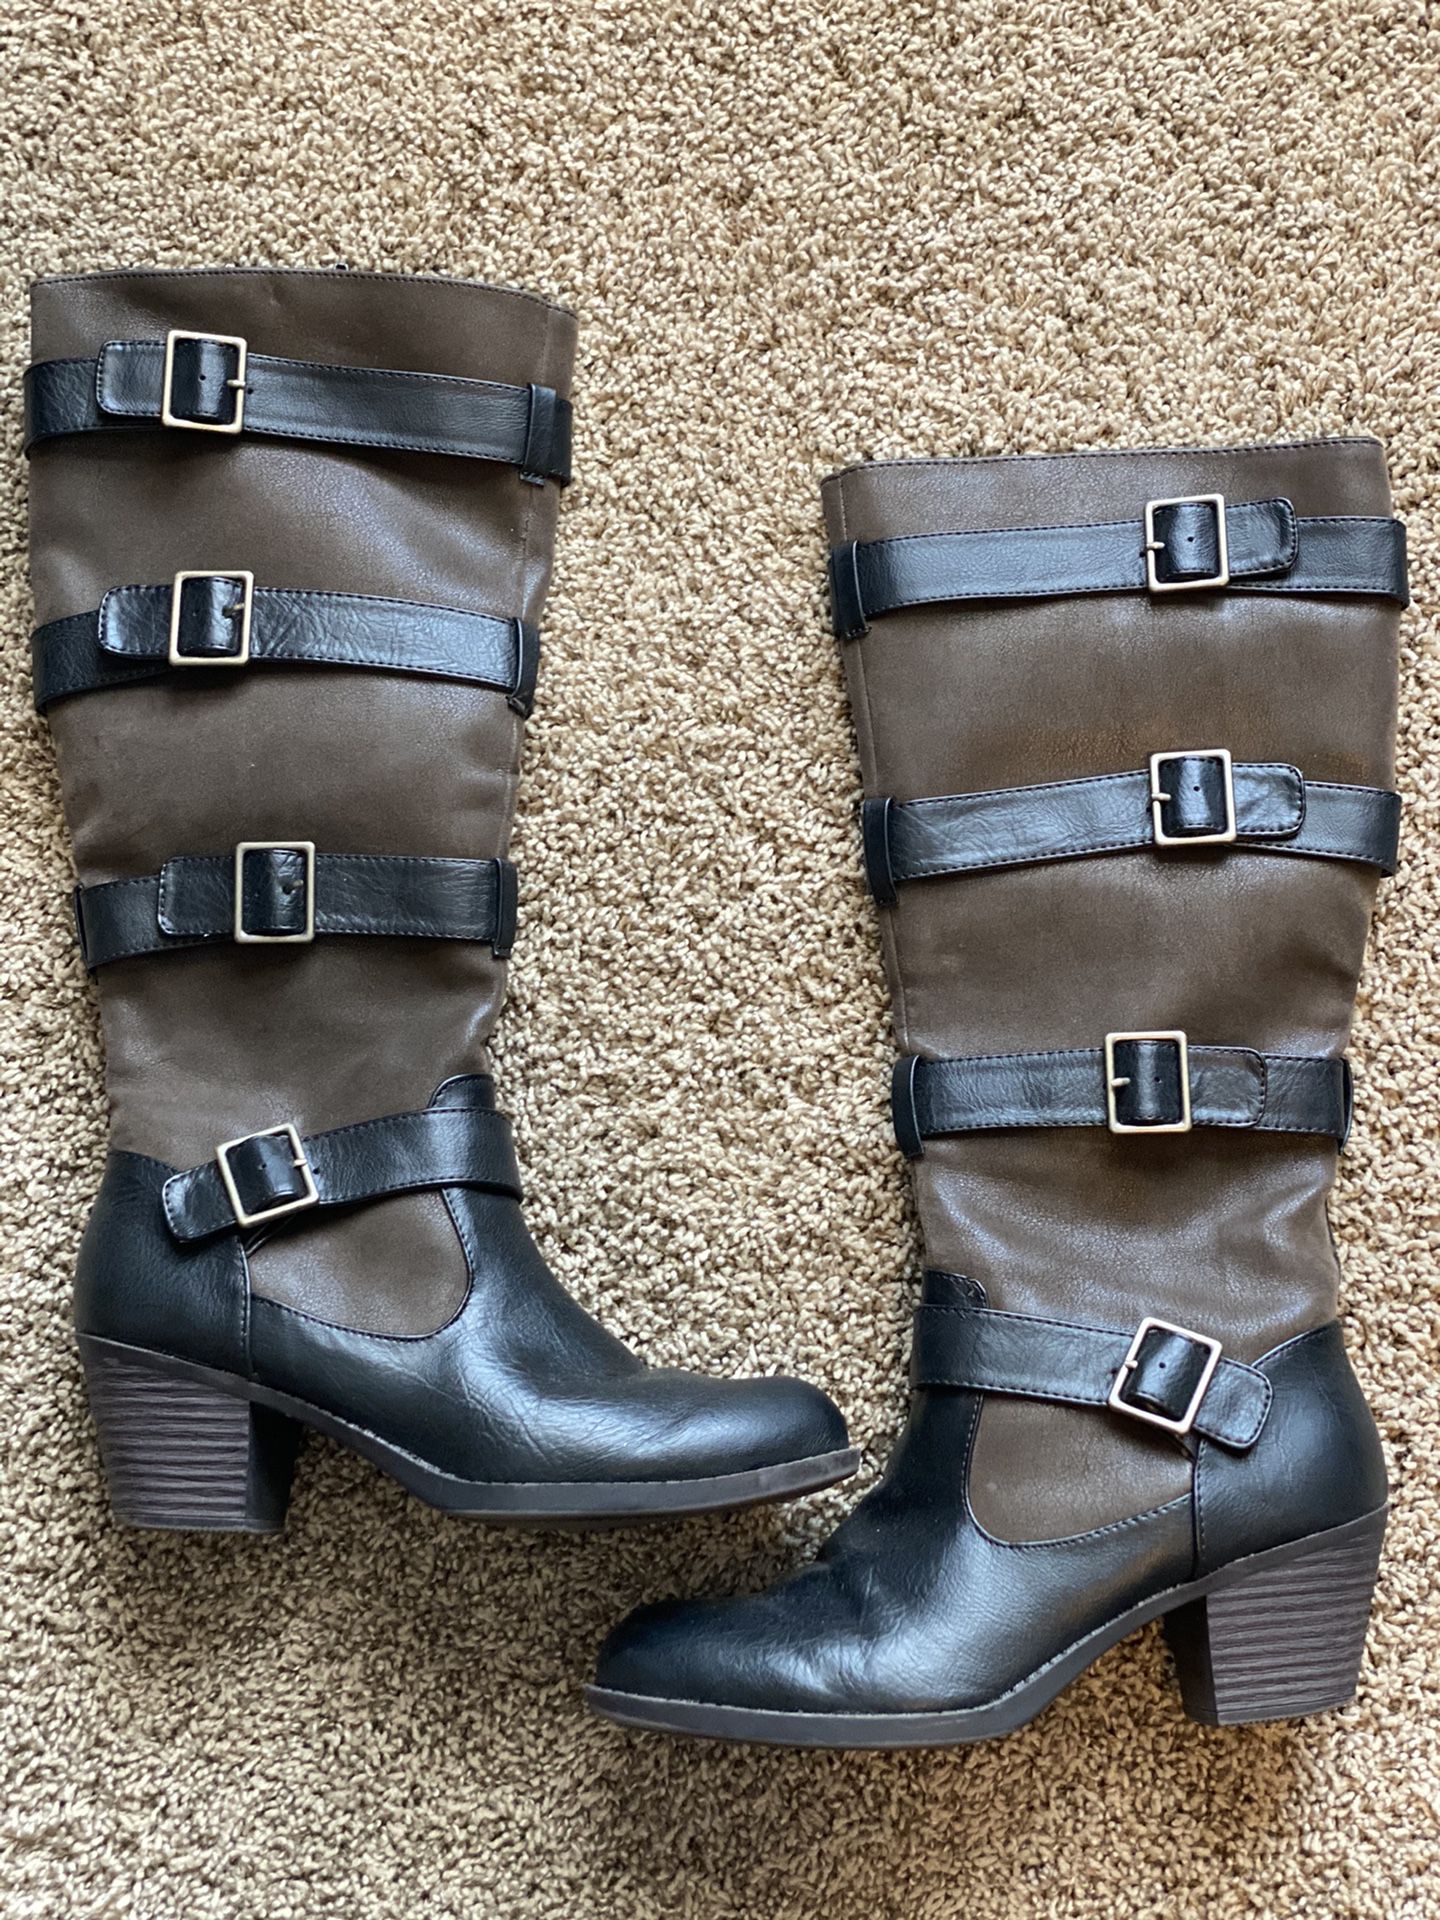 Croft & Barrow - size 9 women’s boots